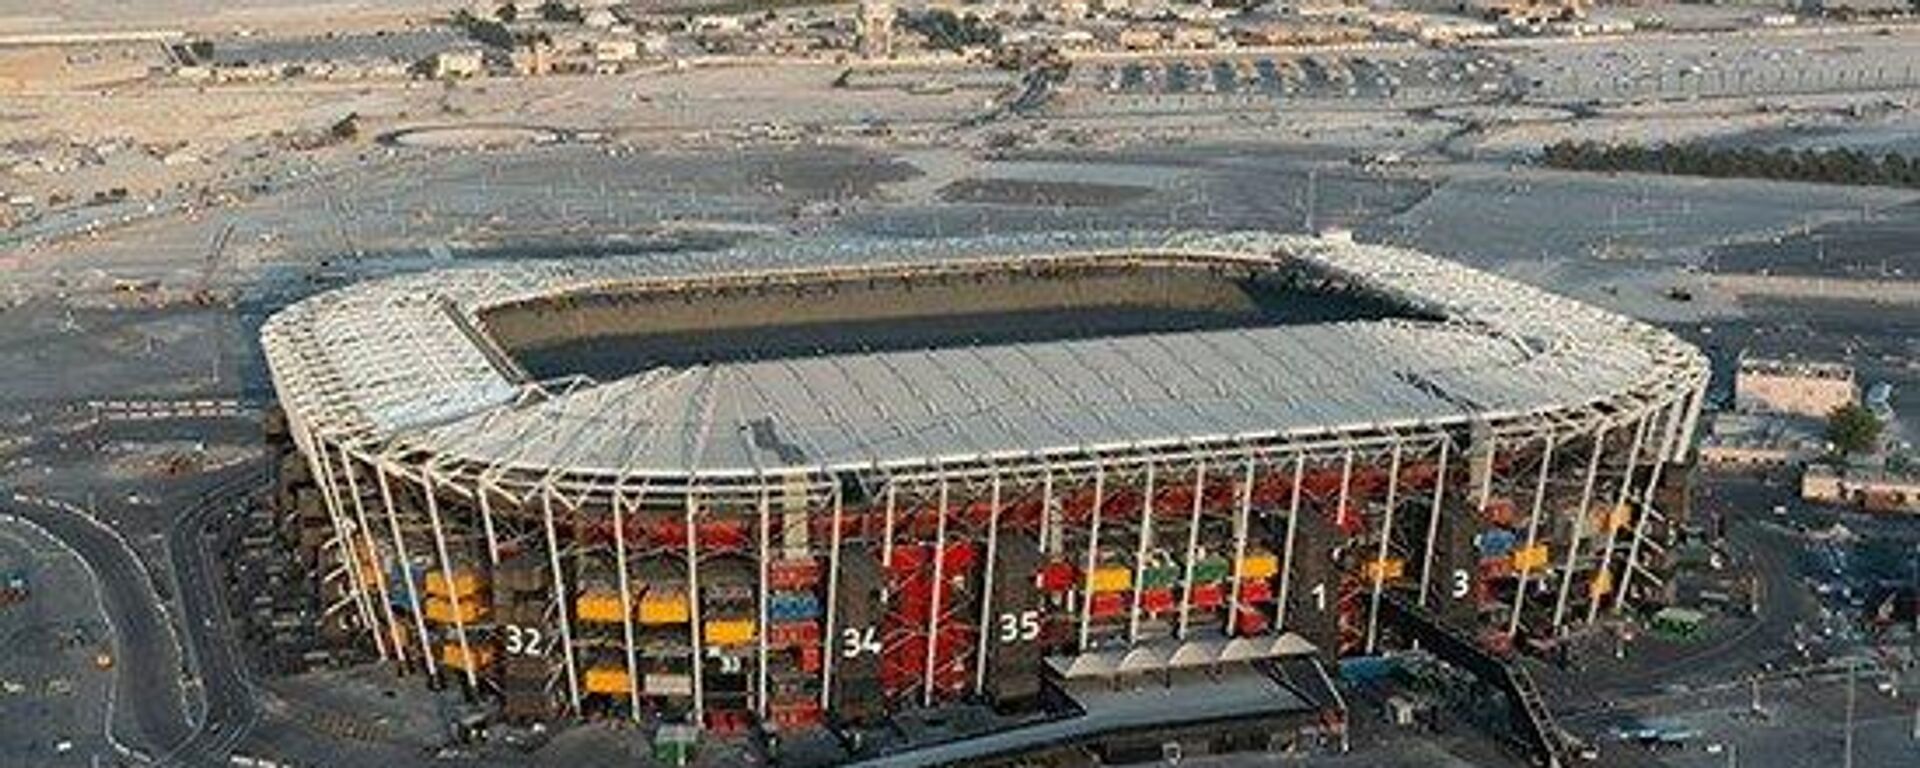 974 Stadium, el estadio estrella del Mundial de Catar 2022 - Sputnik Mundo, 1920, 26.11.2021